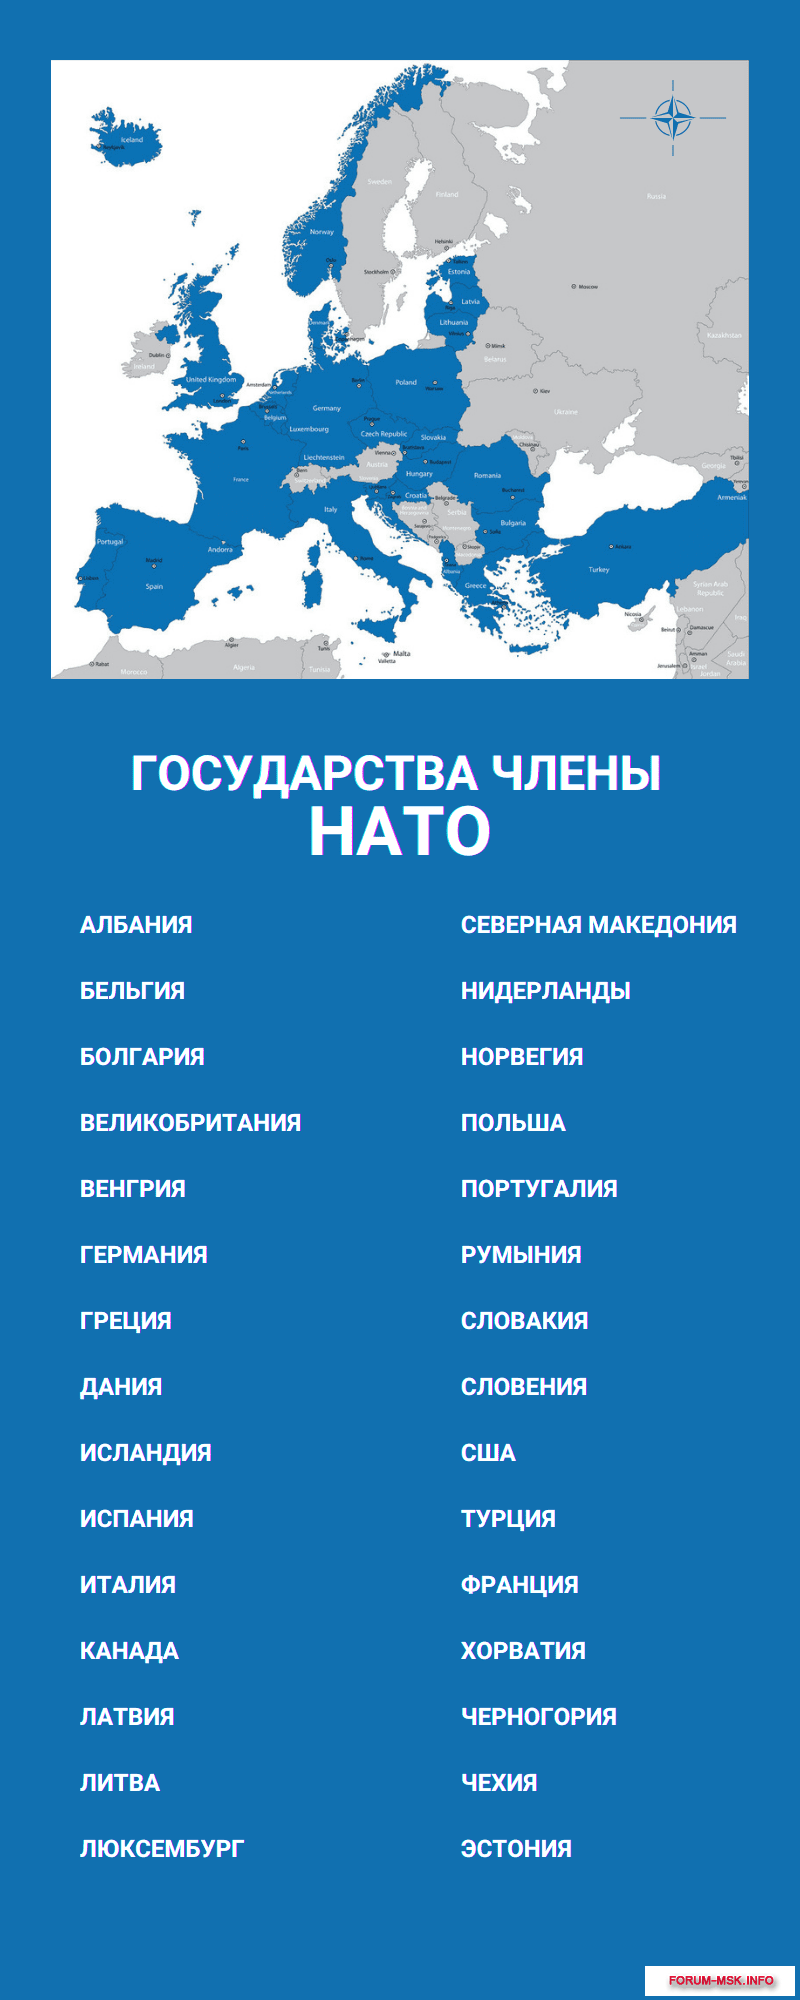 Страны нато названия. Список государств — членов НАТО. Список стран - членов НАТО. Сколько стран в НАТО.